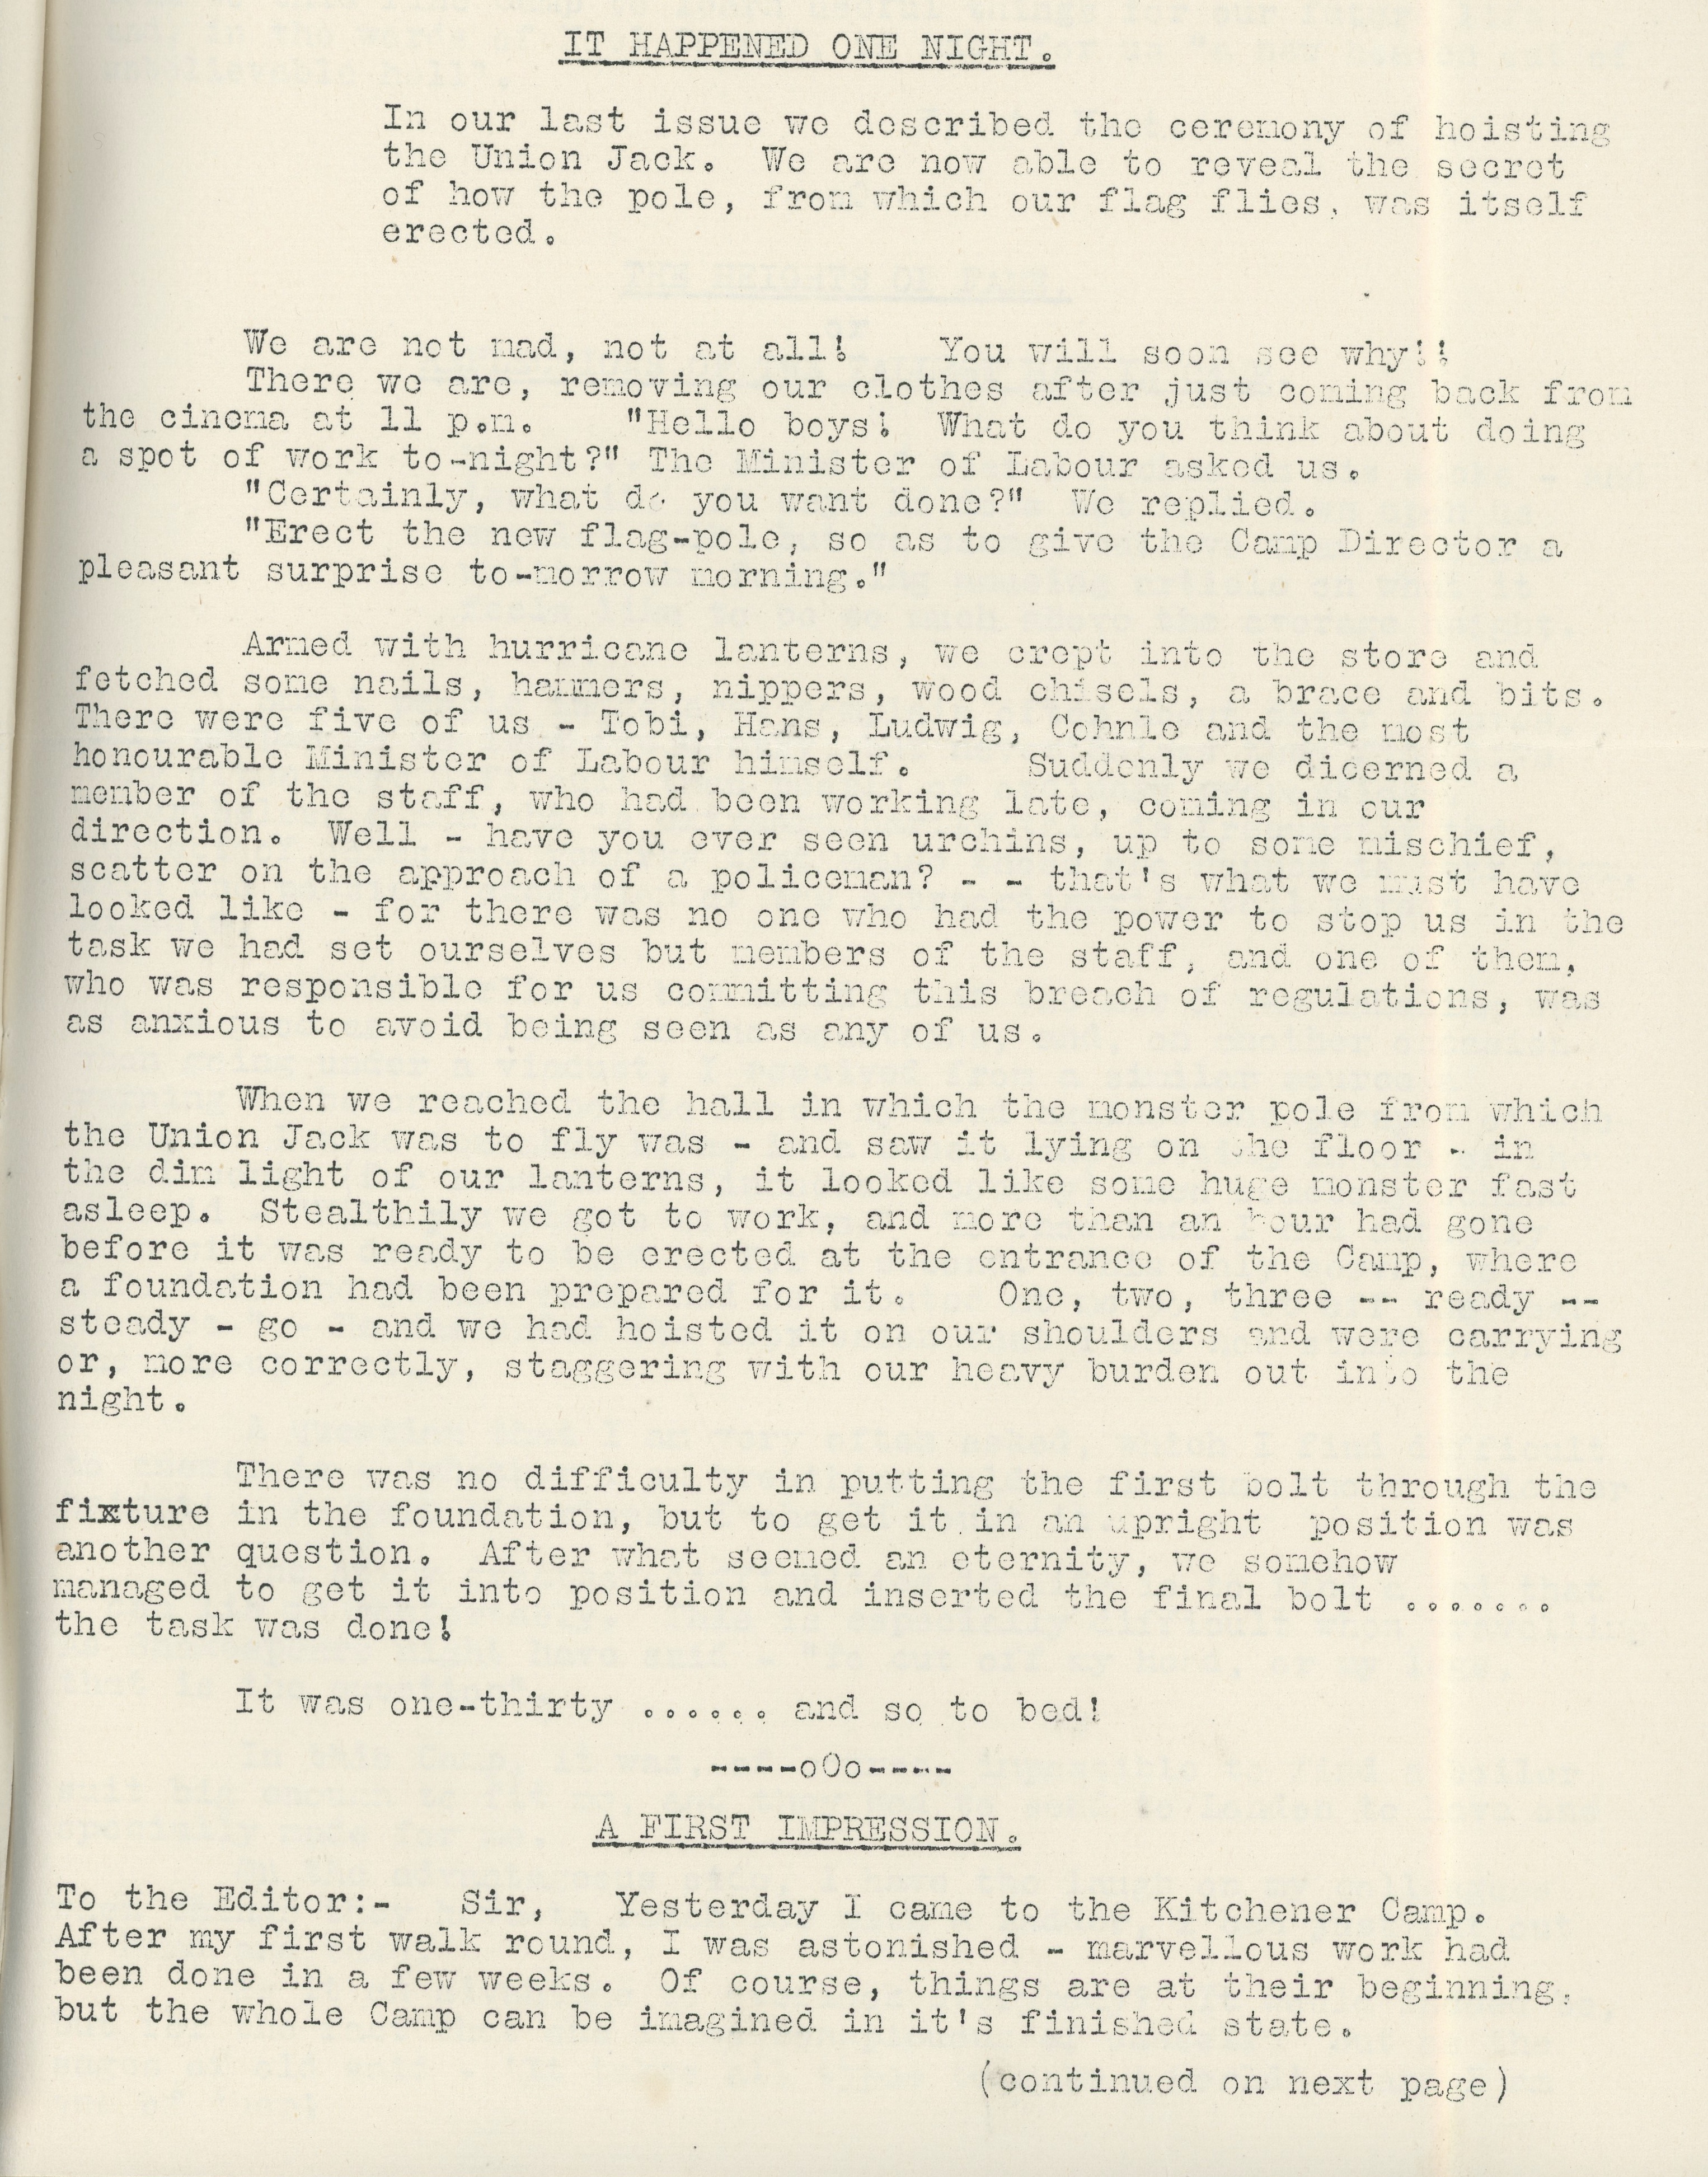 Kitchener Camp Review, April 1939, page 7, base